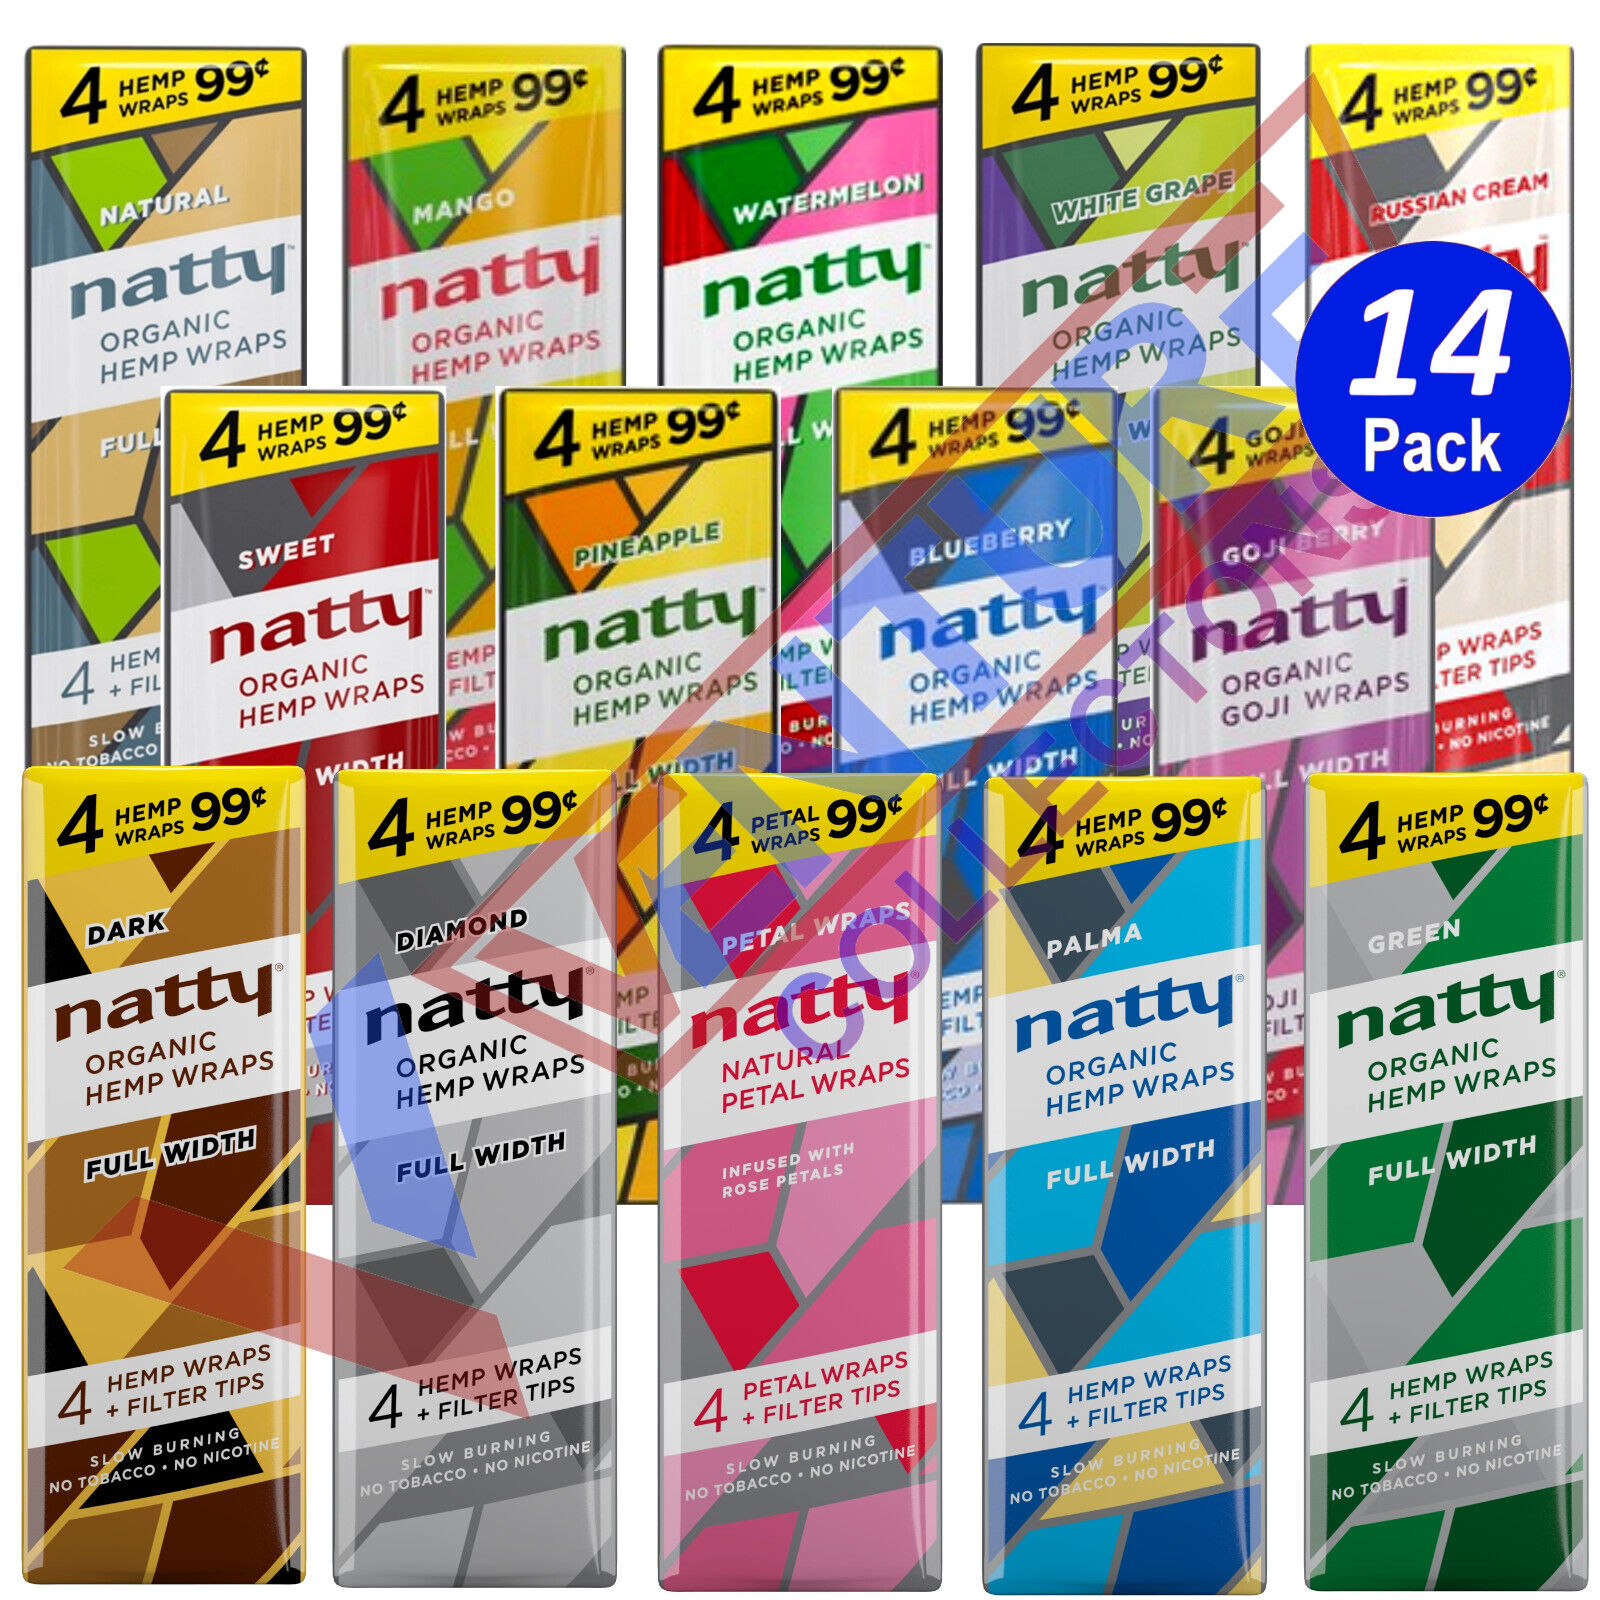 NATTY Organic Flavored Full-Width Herbal Wraps Variety Sampler 14/4CT Packs 56PC